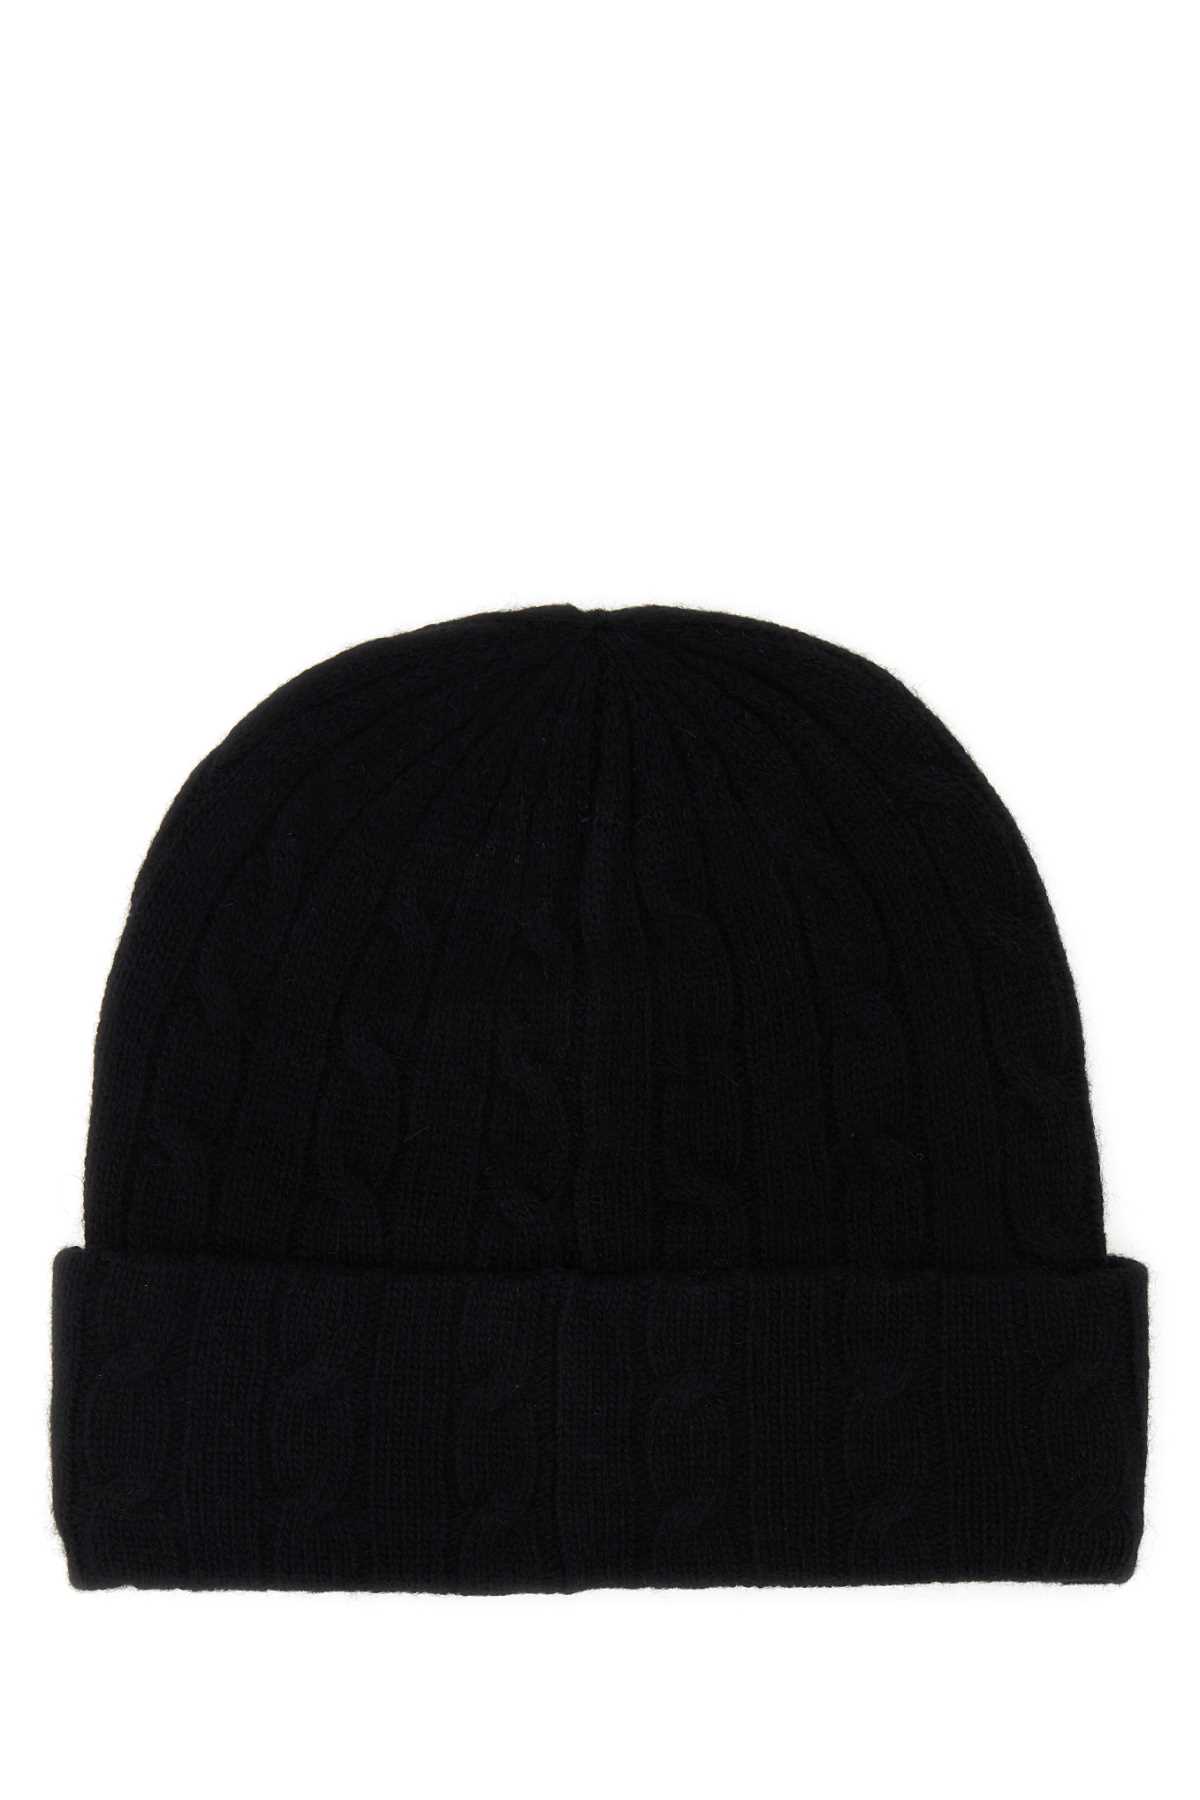 Polo Ralph Lauren Black Wool Blend Beanie Hat In 001